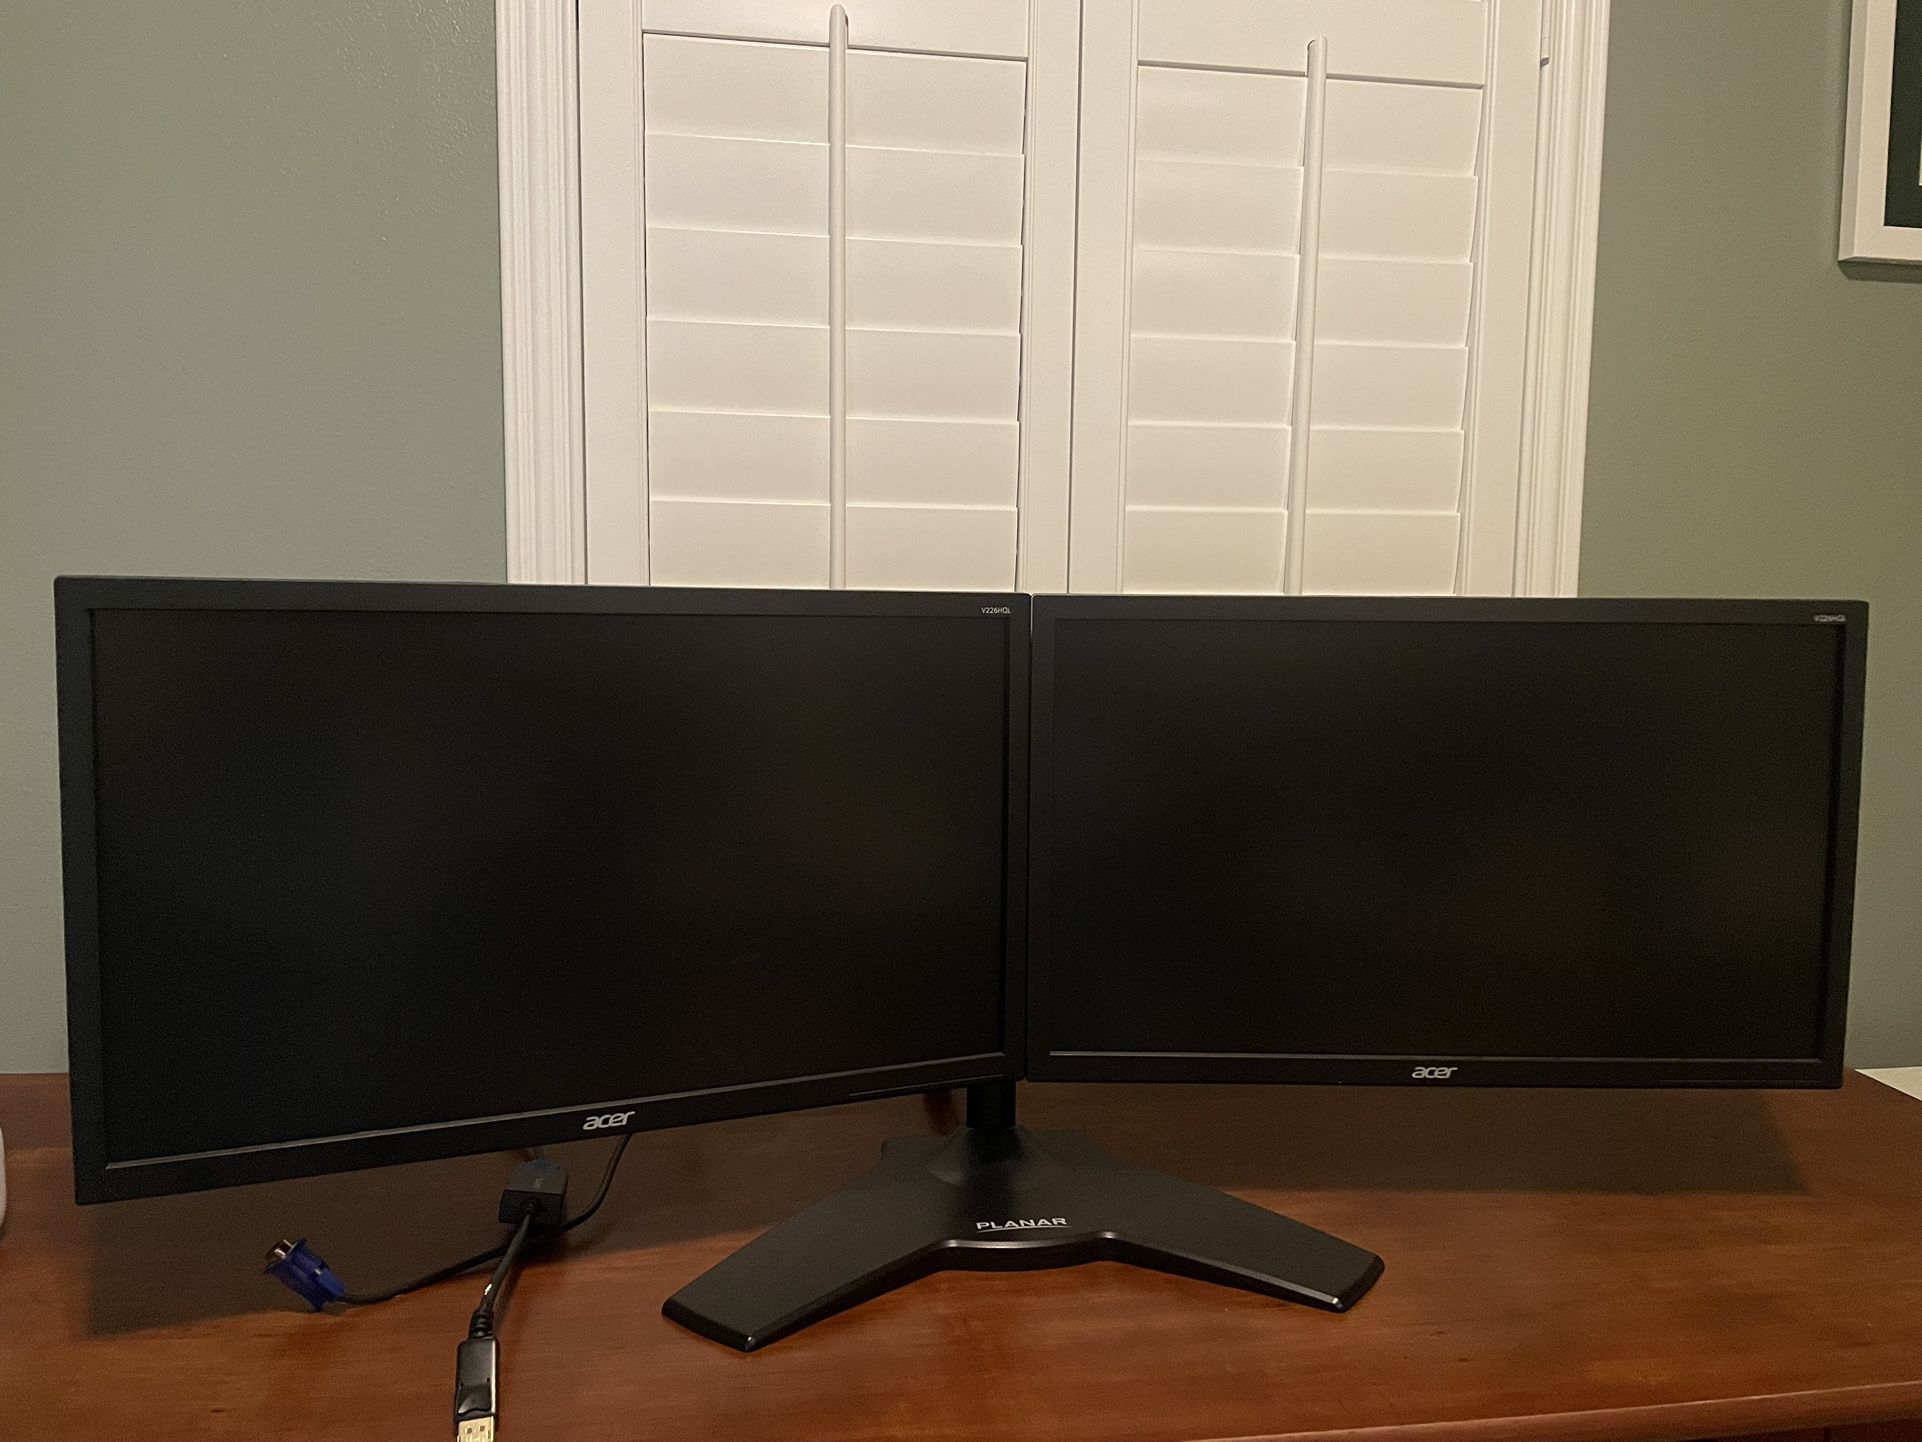 Dual Monitor